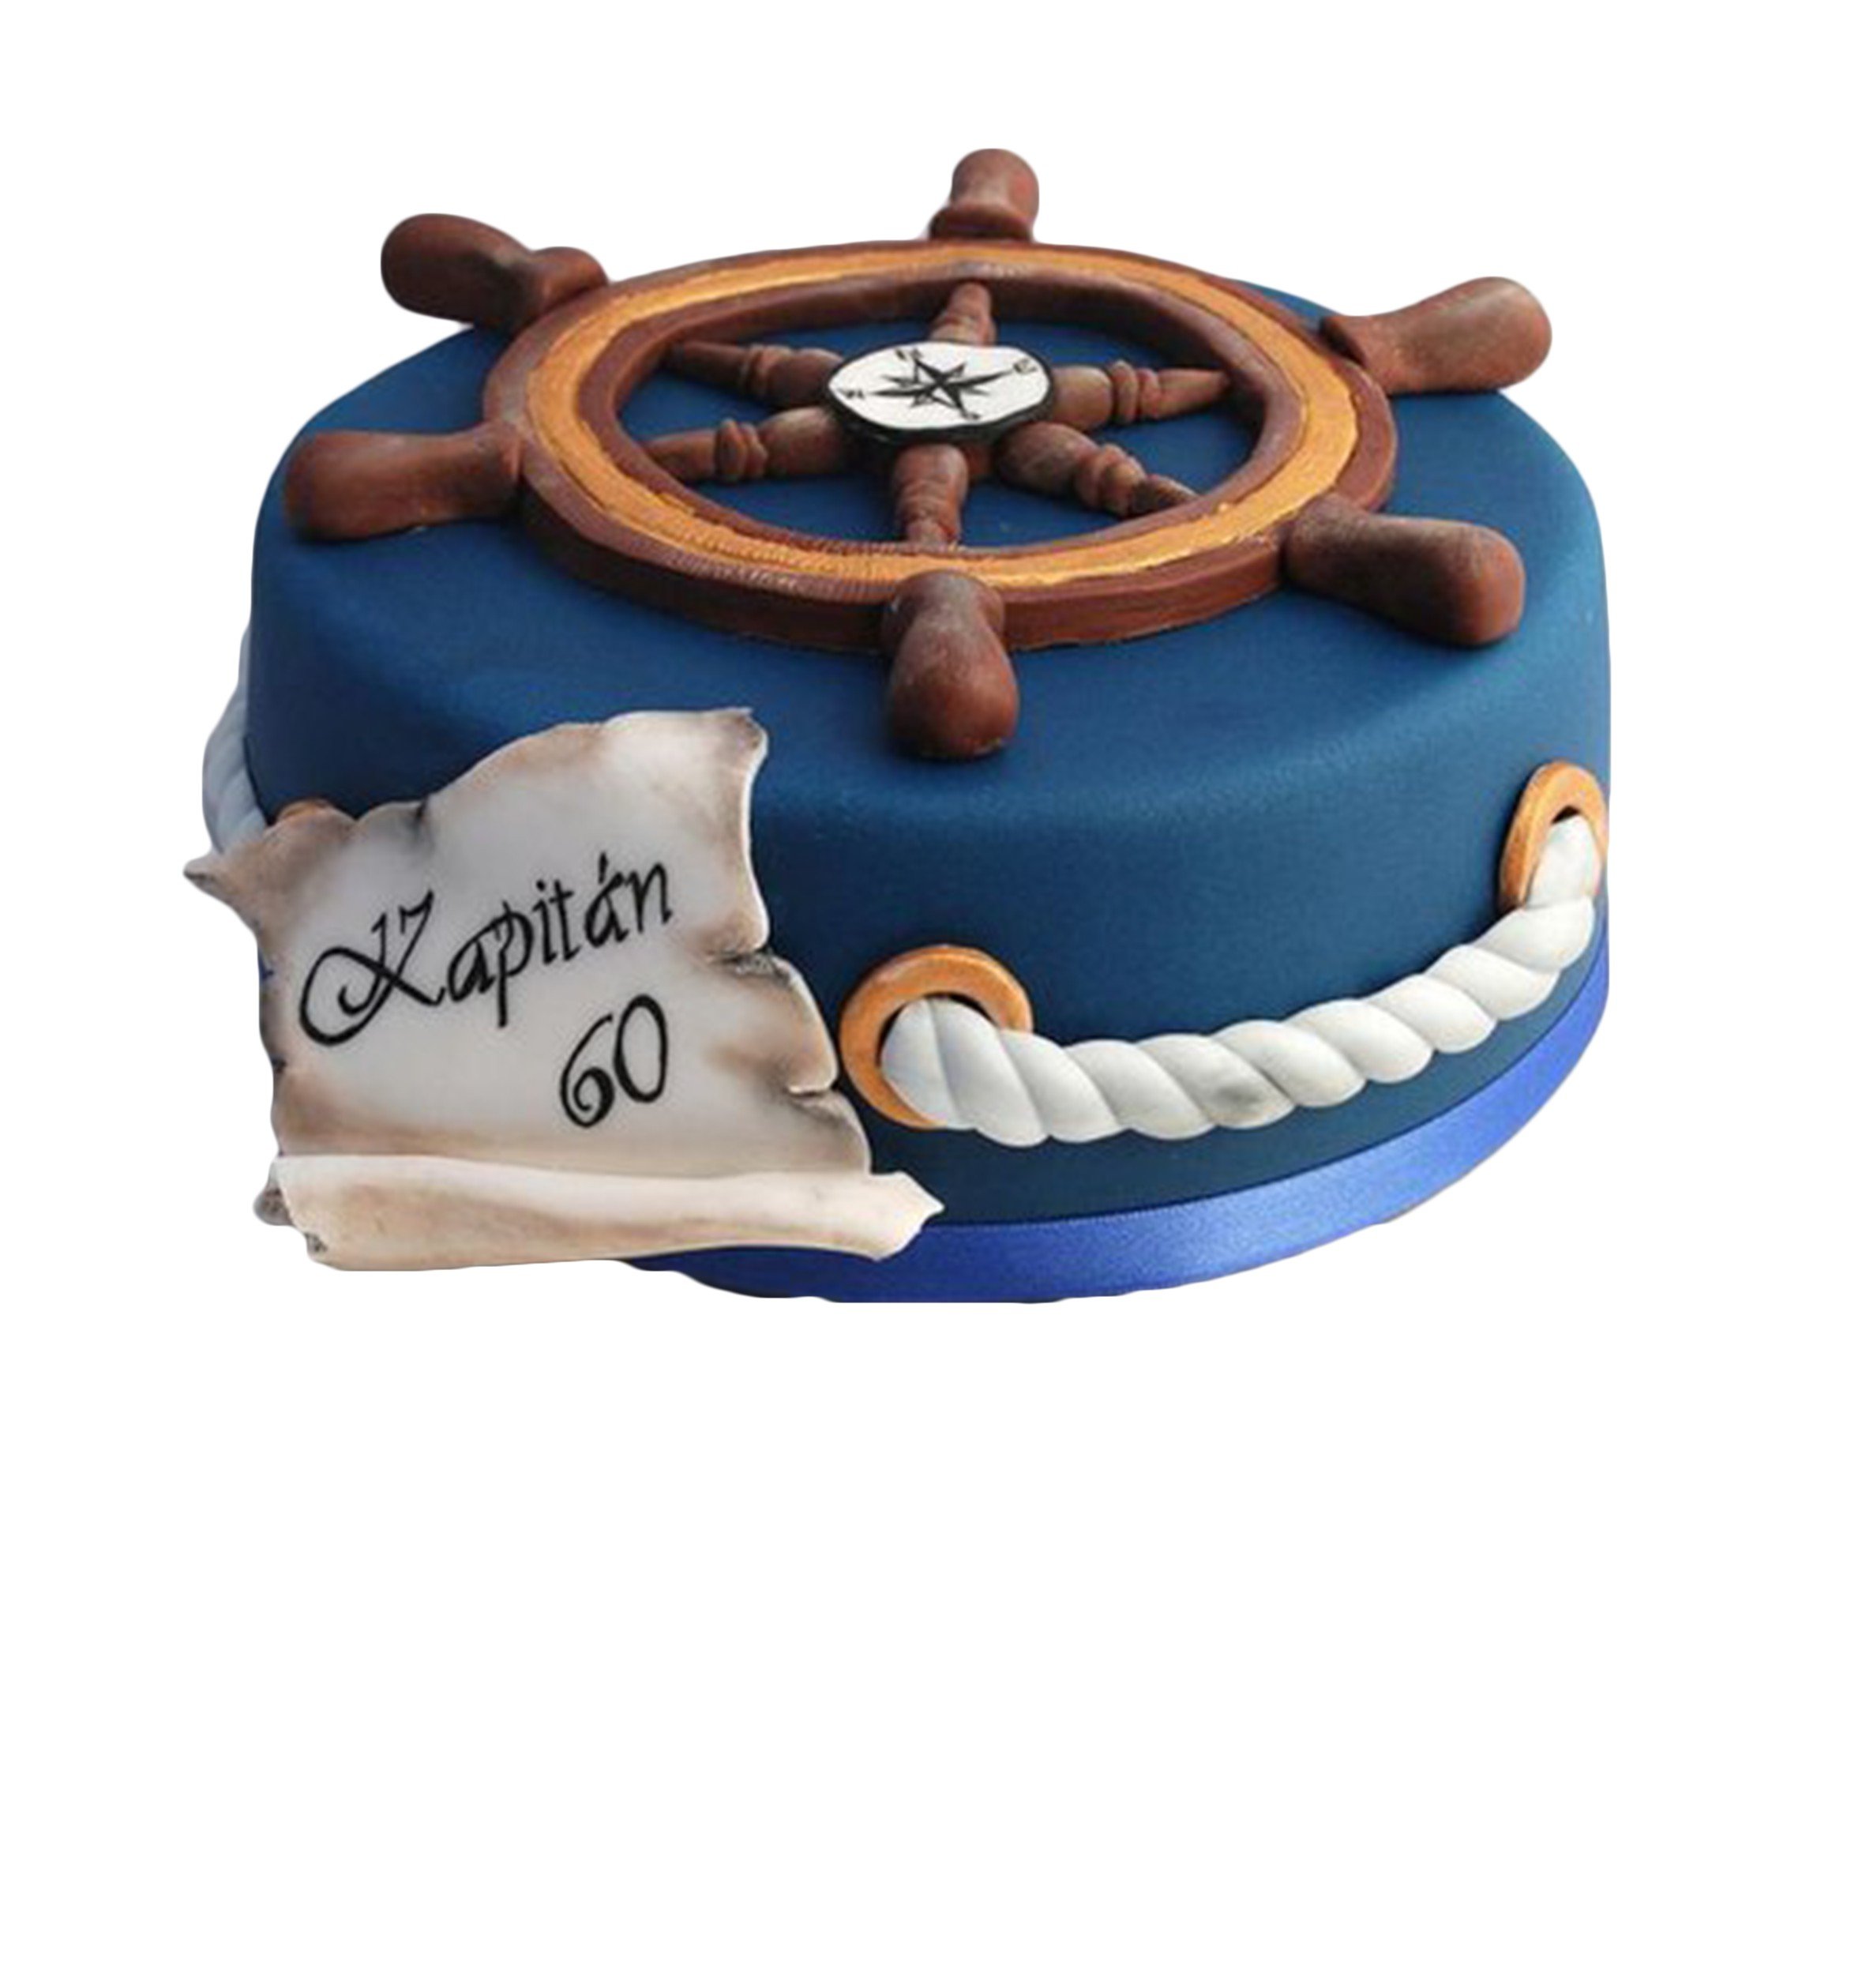 День рождения мужчине морское. Торт морская тематика. Торт в морском стиле. Торт с морской тематикой для мужчины. Мужской торт в морском стиле.